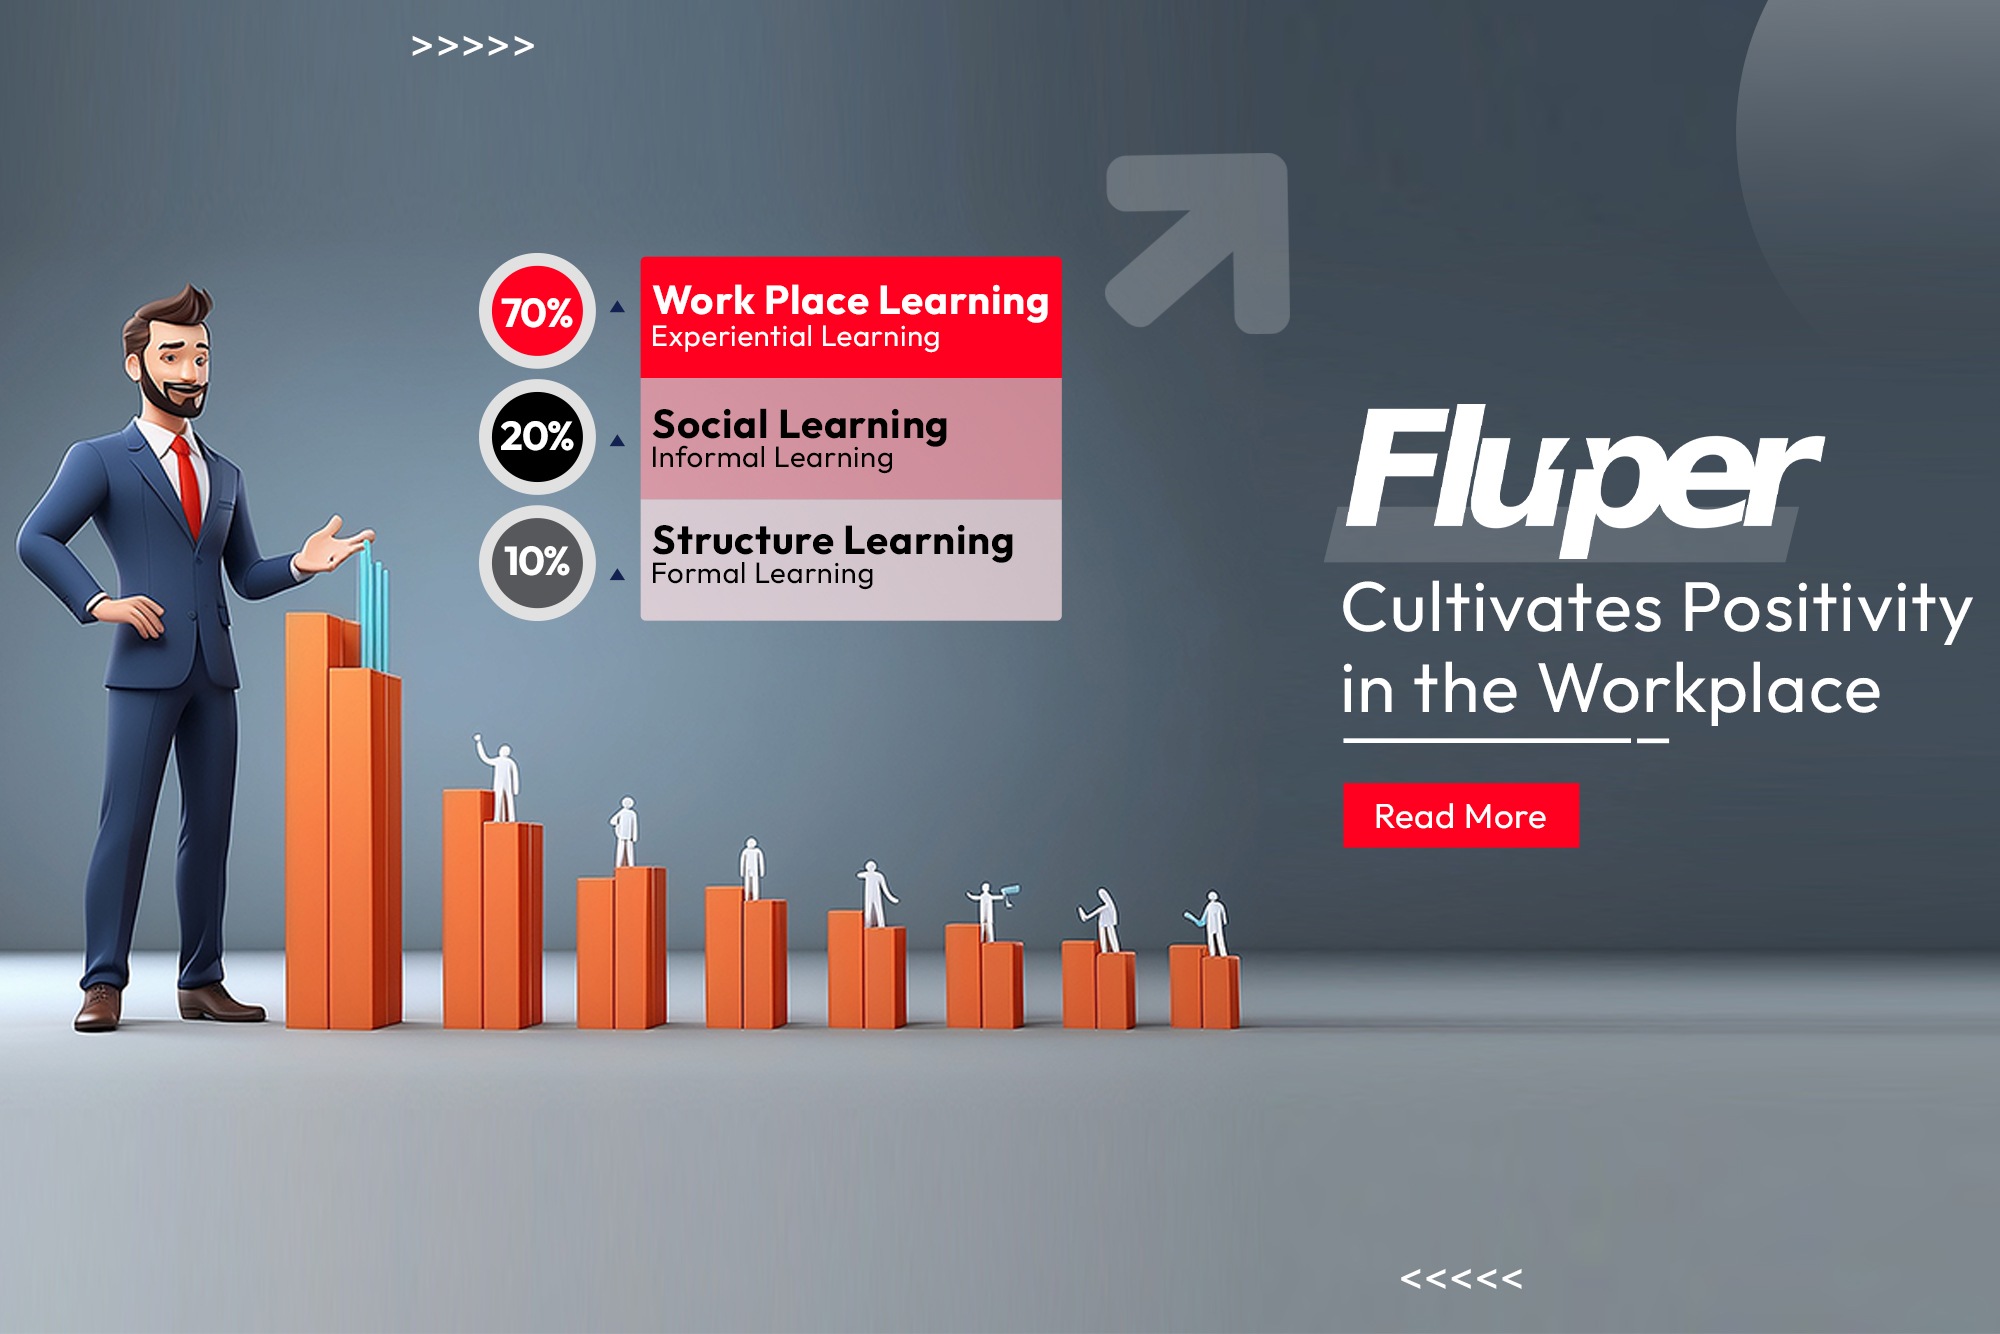 How Fluper Work Culture Fosters Professional Development